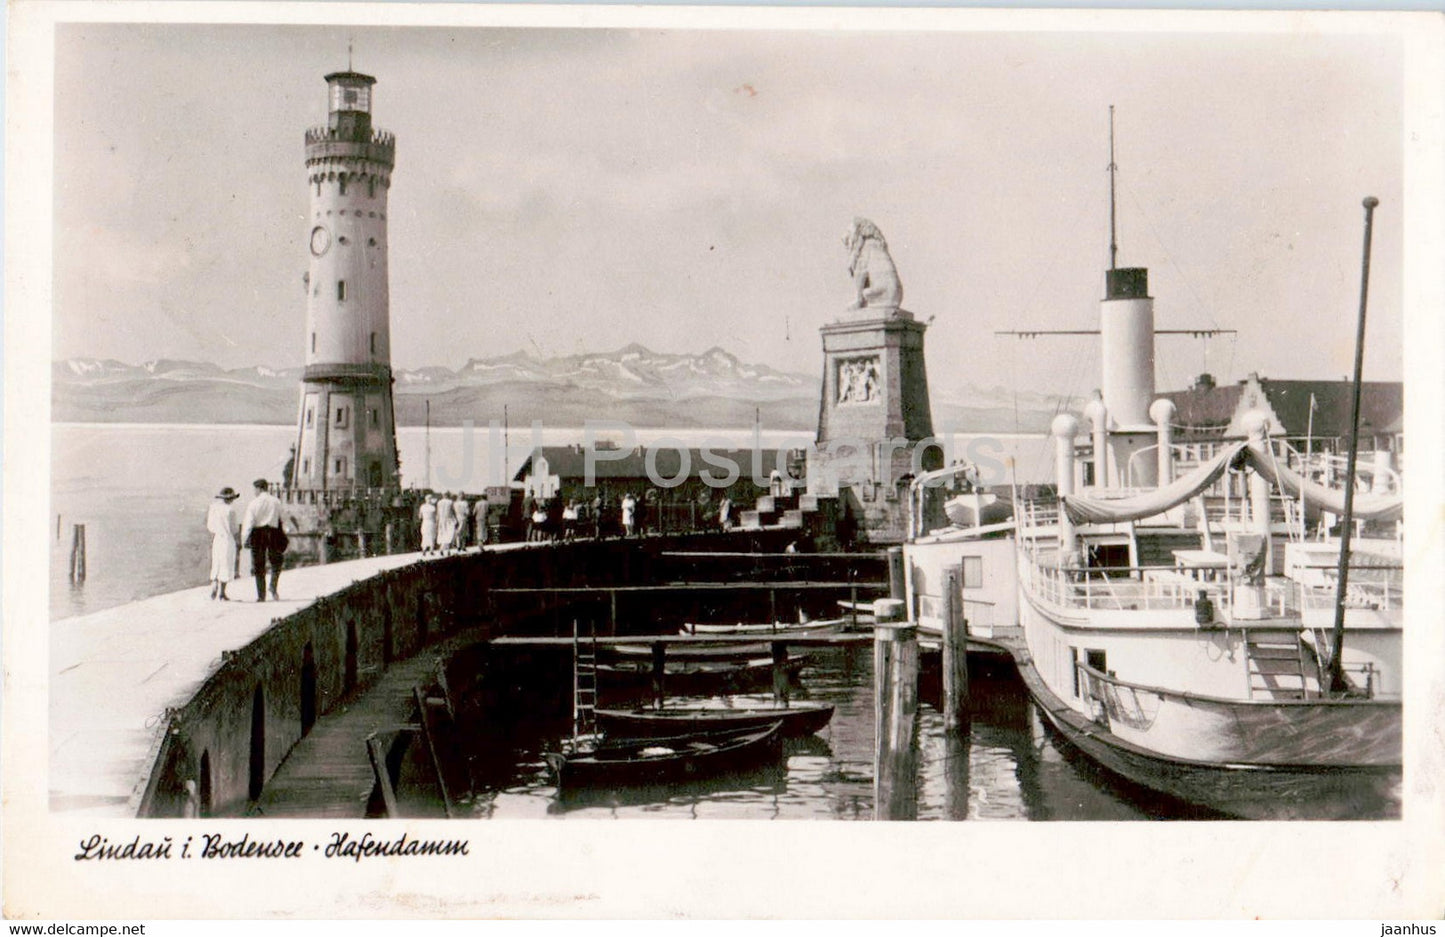 Lindau i Bodensee - Hafendamm - ship - lighthouse - old postcard - 1950 - Germany - used - JH Postcards